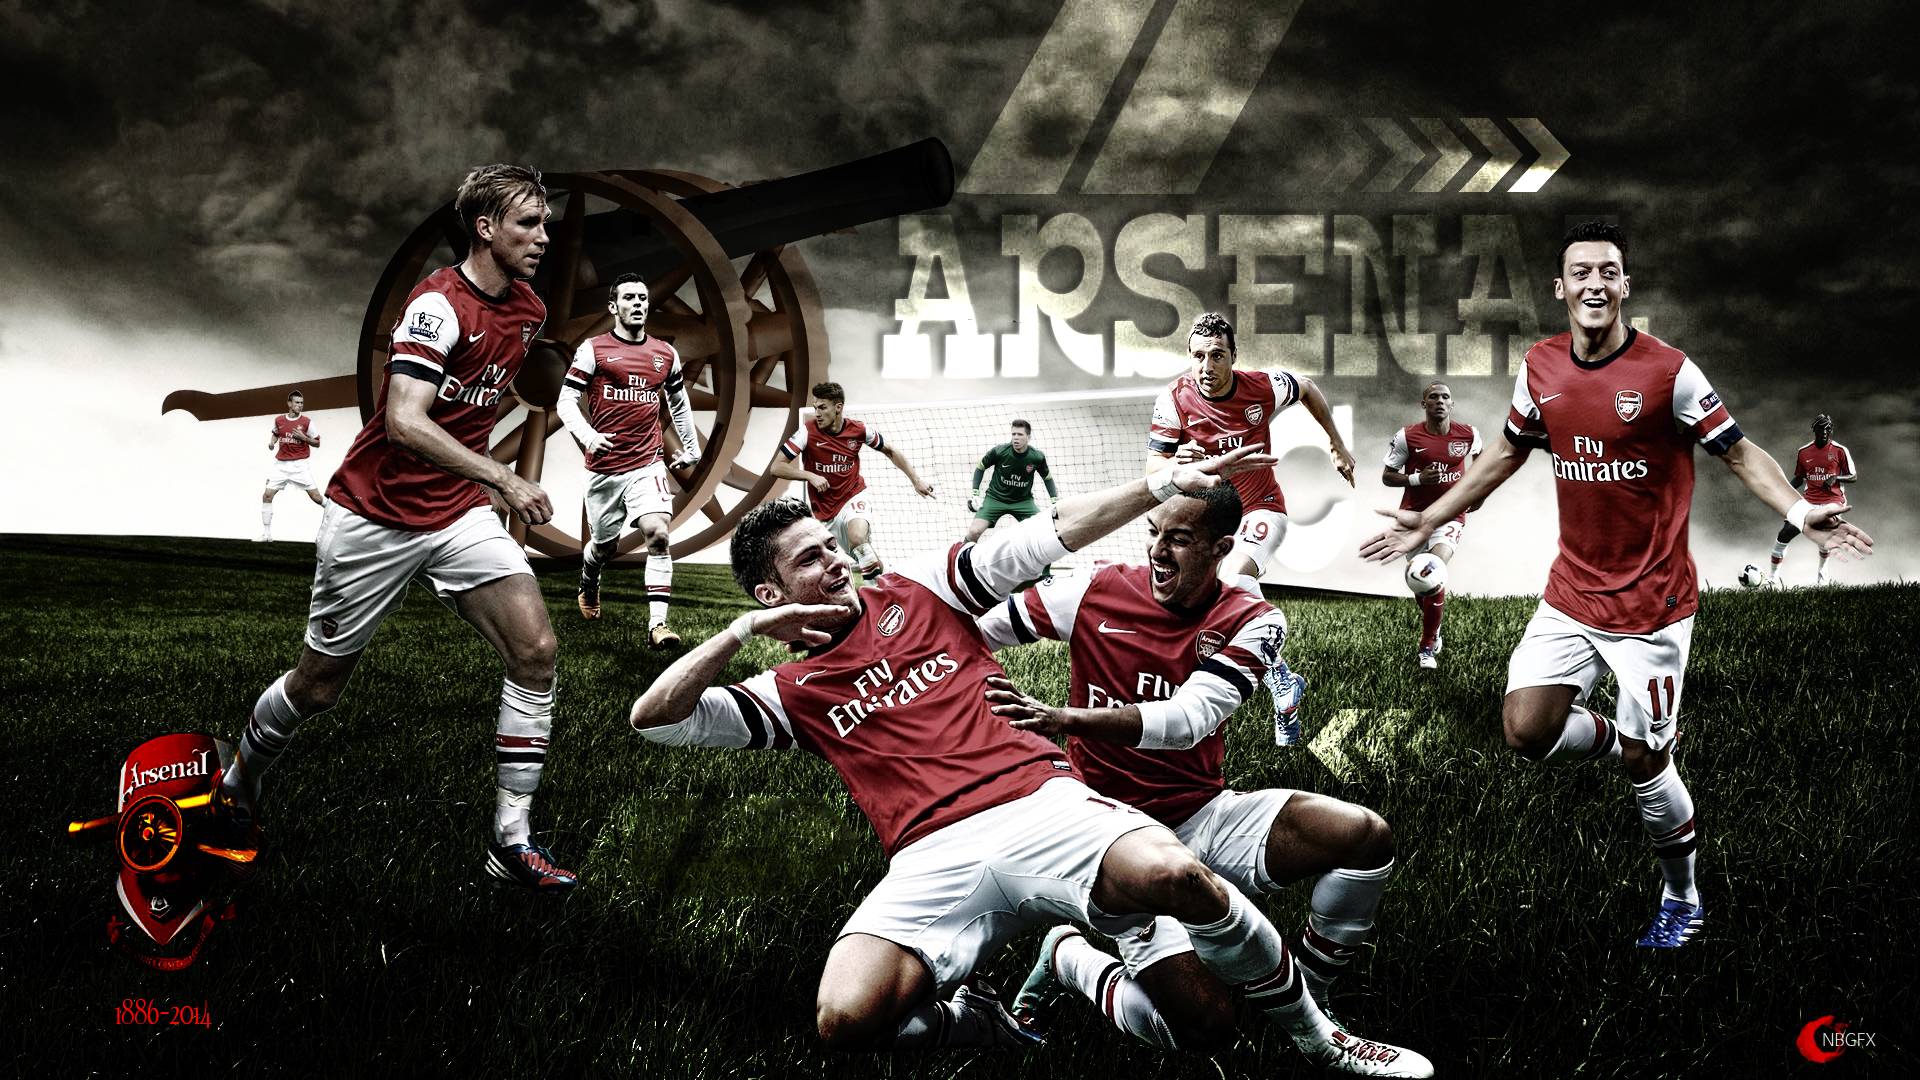 Arsenal Logo Wallpaper